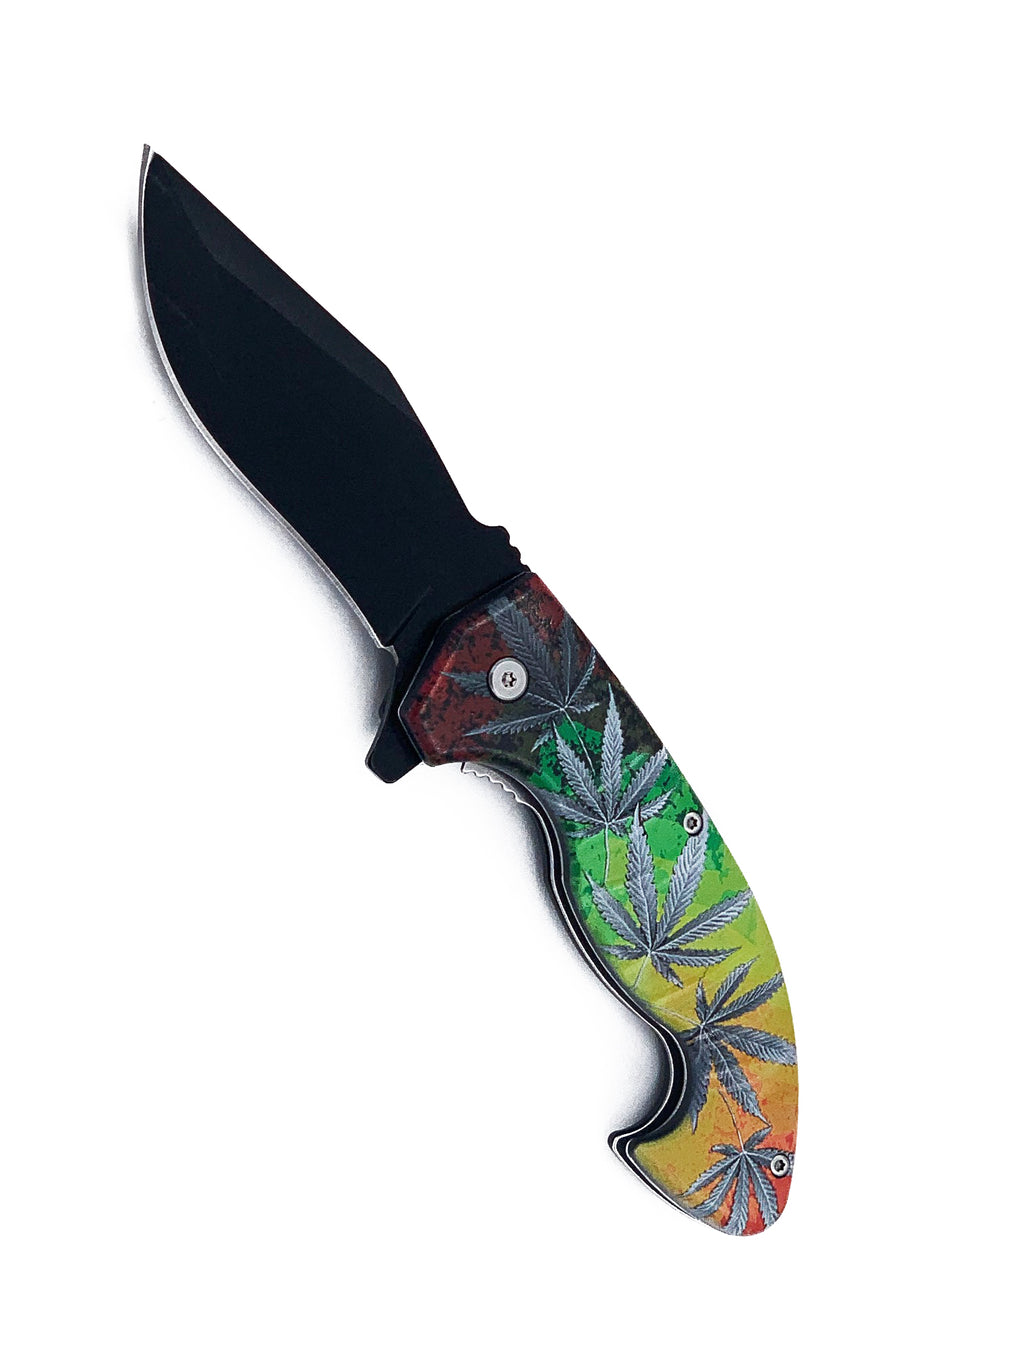 Chronic Marijuana Leaf Spring Assisted Folding Pocket Knife 3" Black Blade